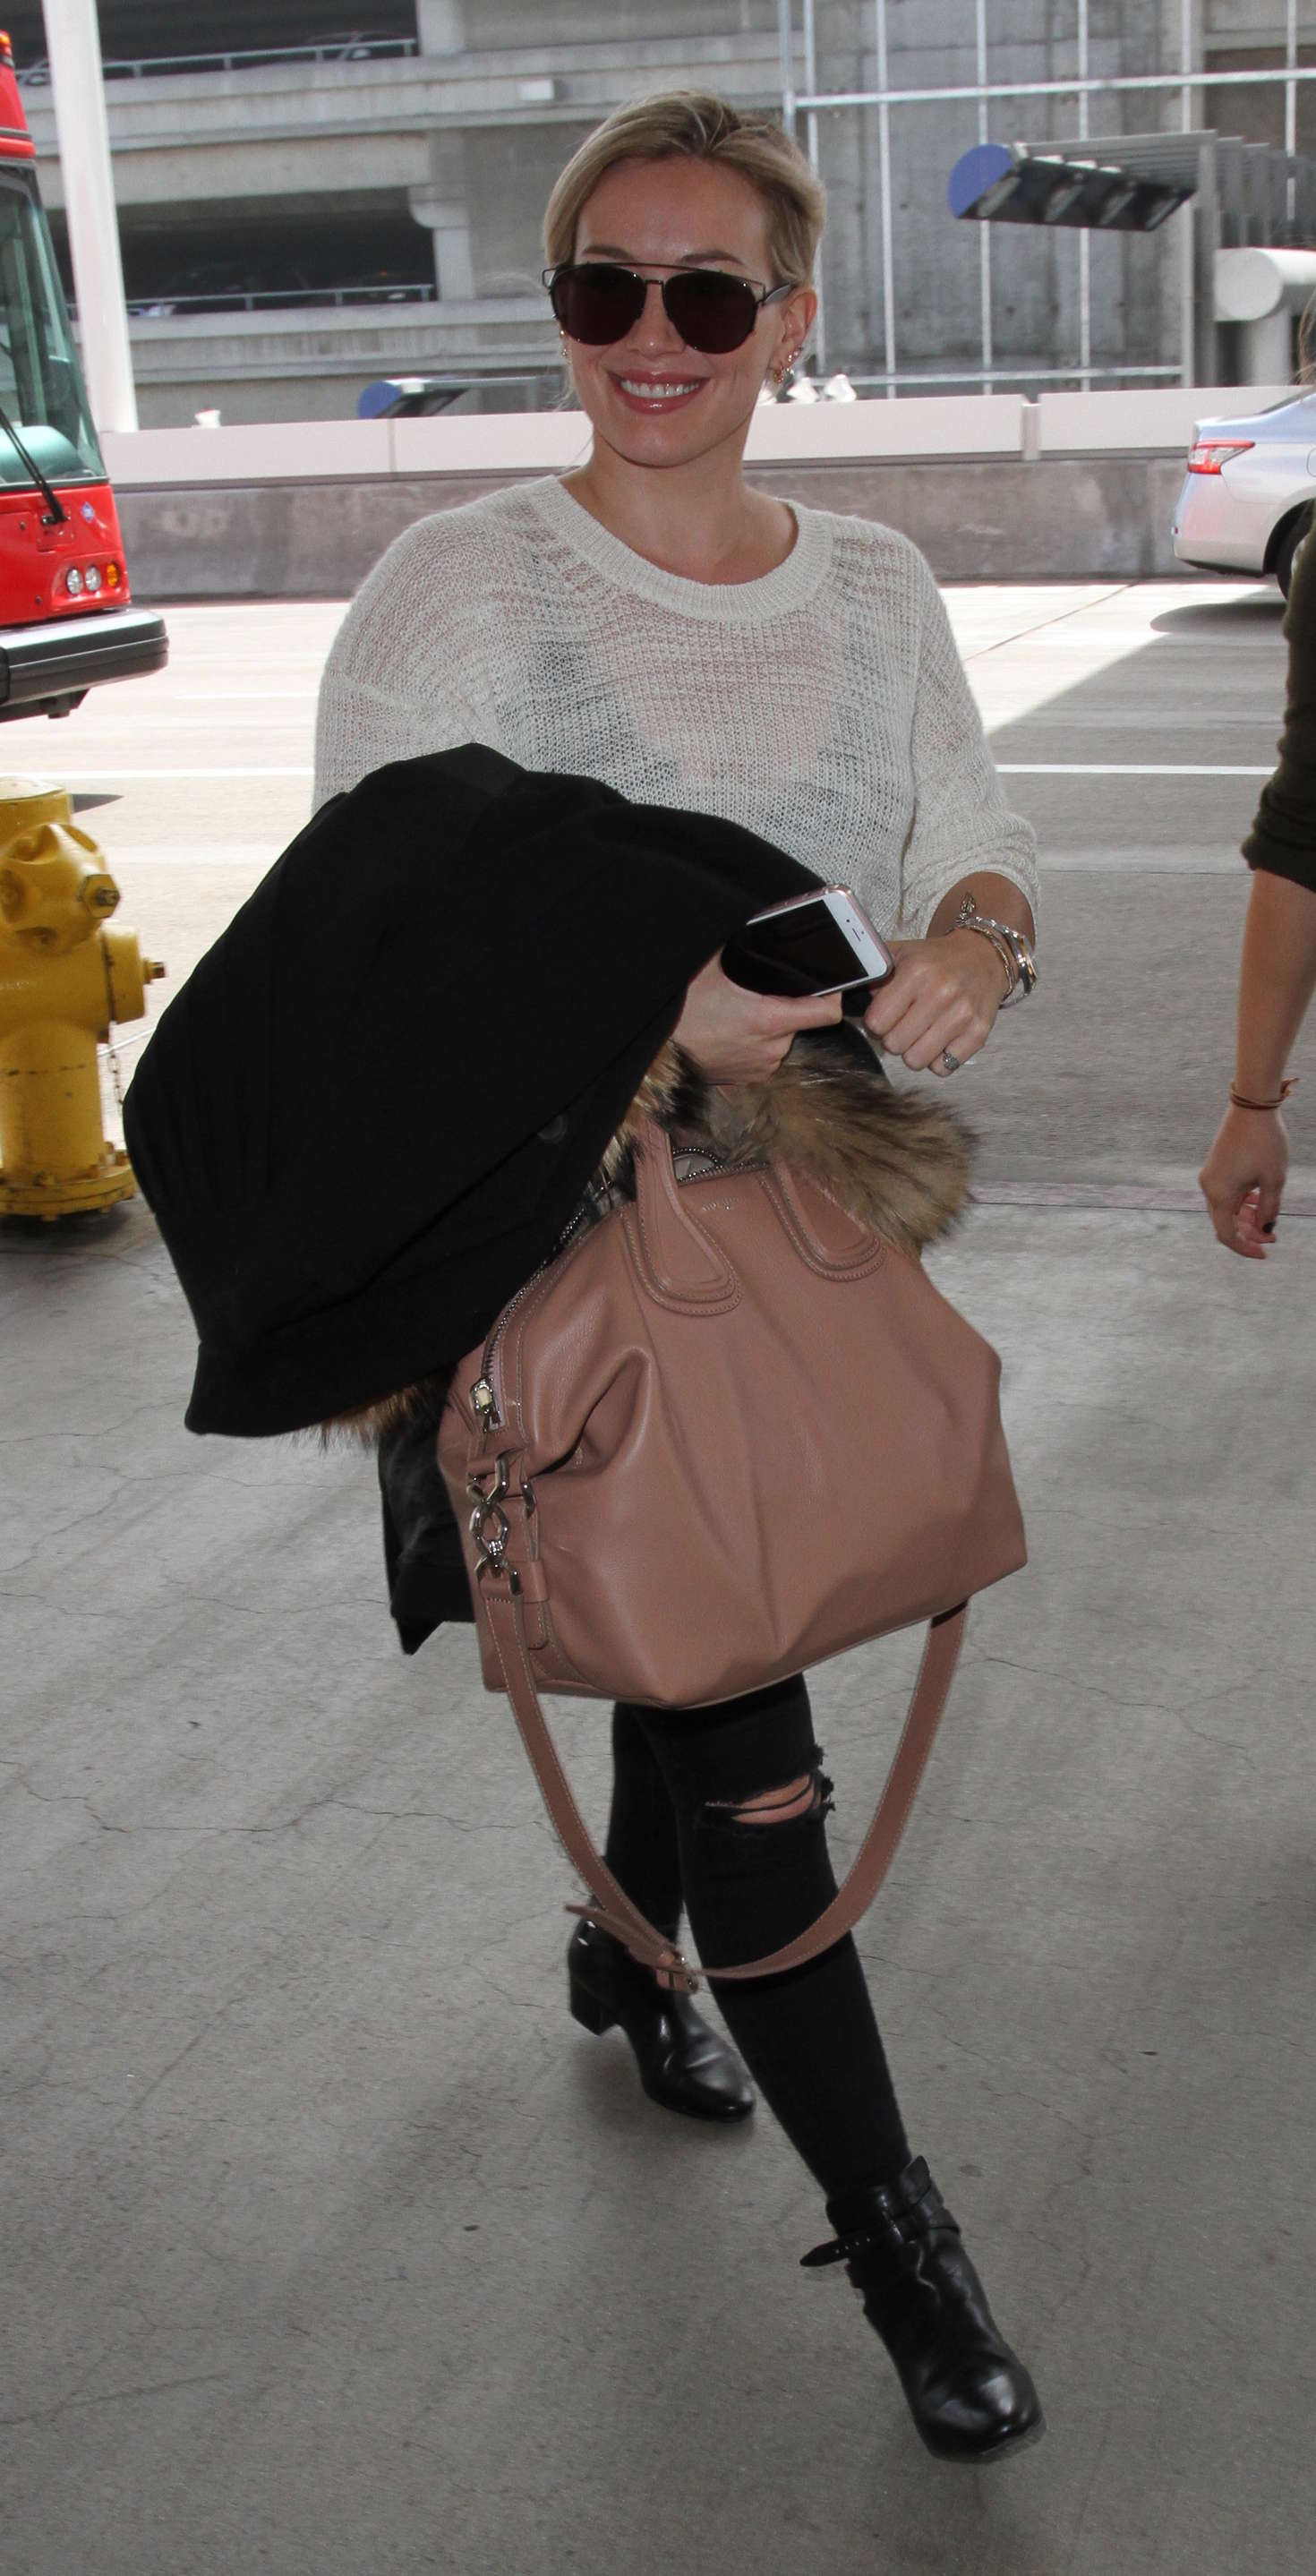 Hilary Duff at LAX Airport in LA